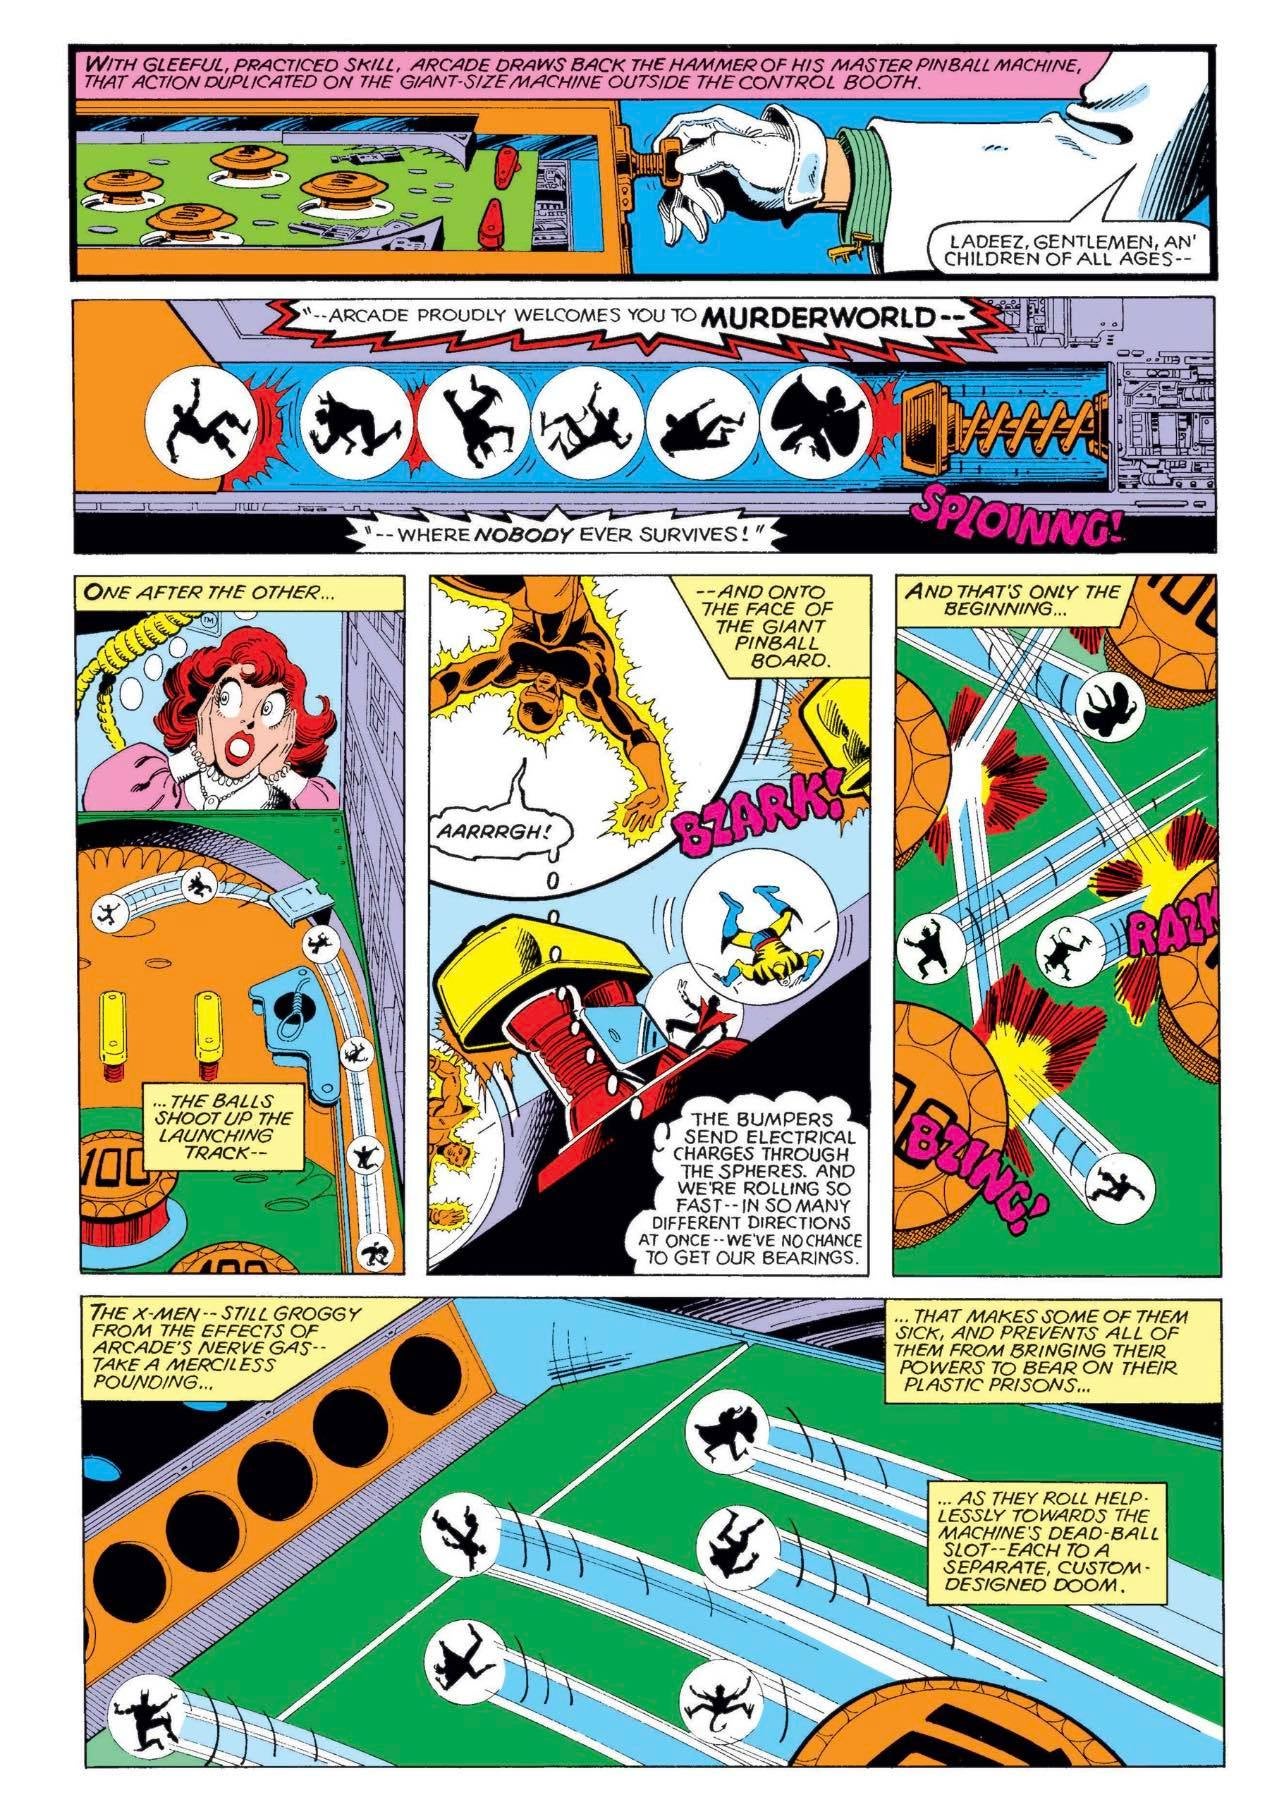 The X-Men enter Murderworld in Uncanny X-Men #123 (art by John Byrne and Terry Austin)